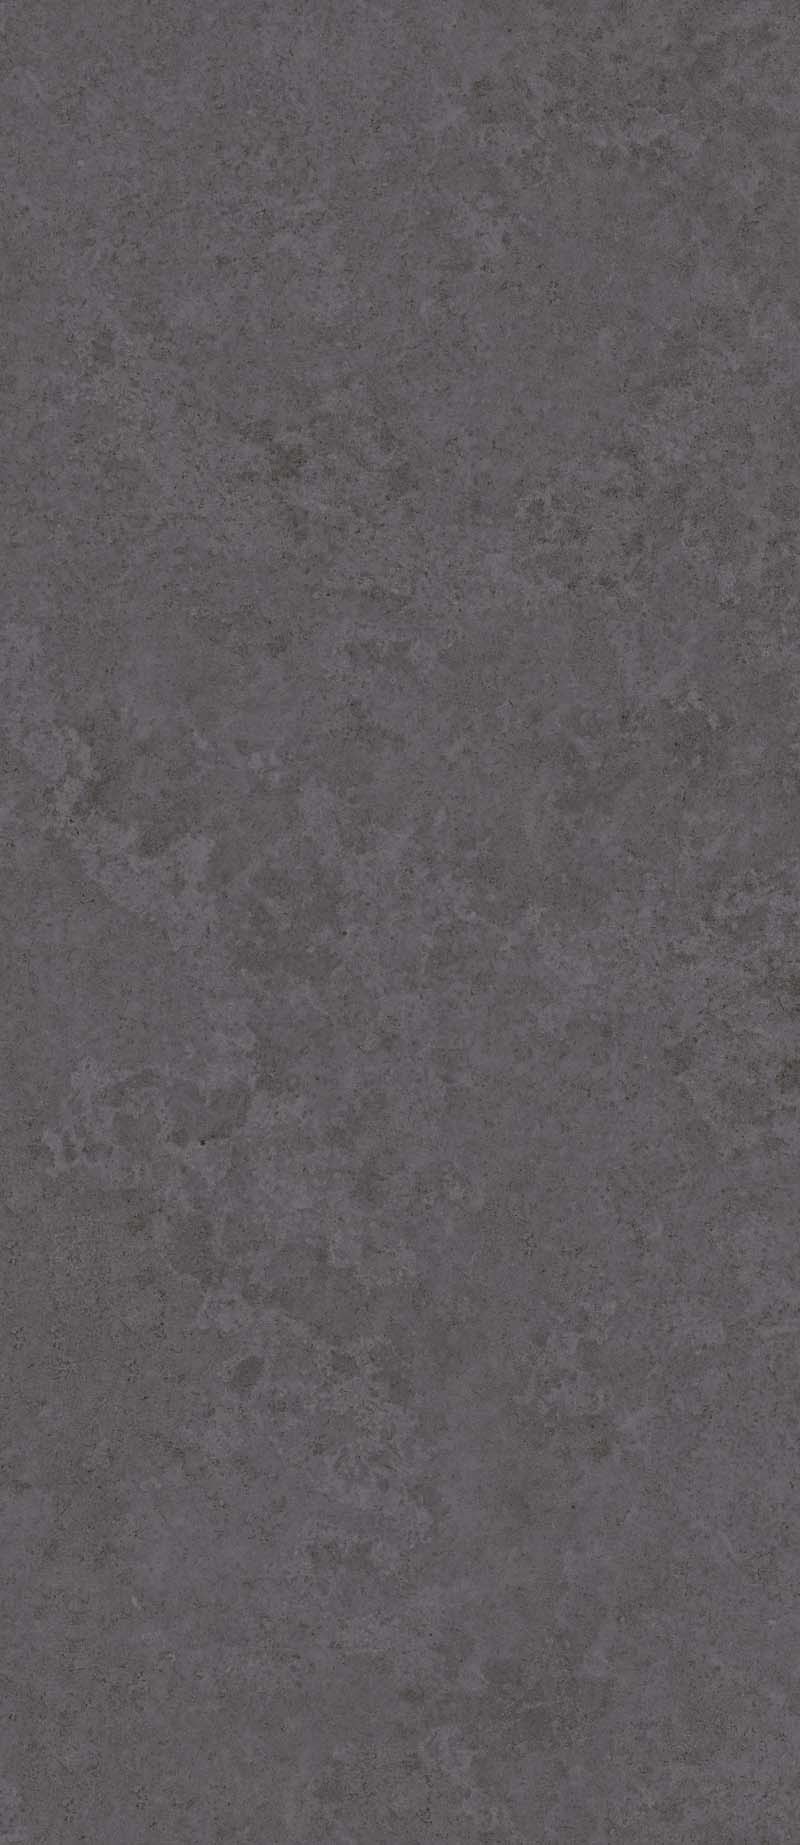 哑光干粒面+灰坯-小砂岩棕-NJC1227G47Y03Y.jpg